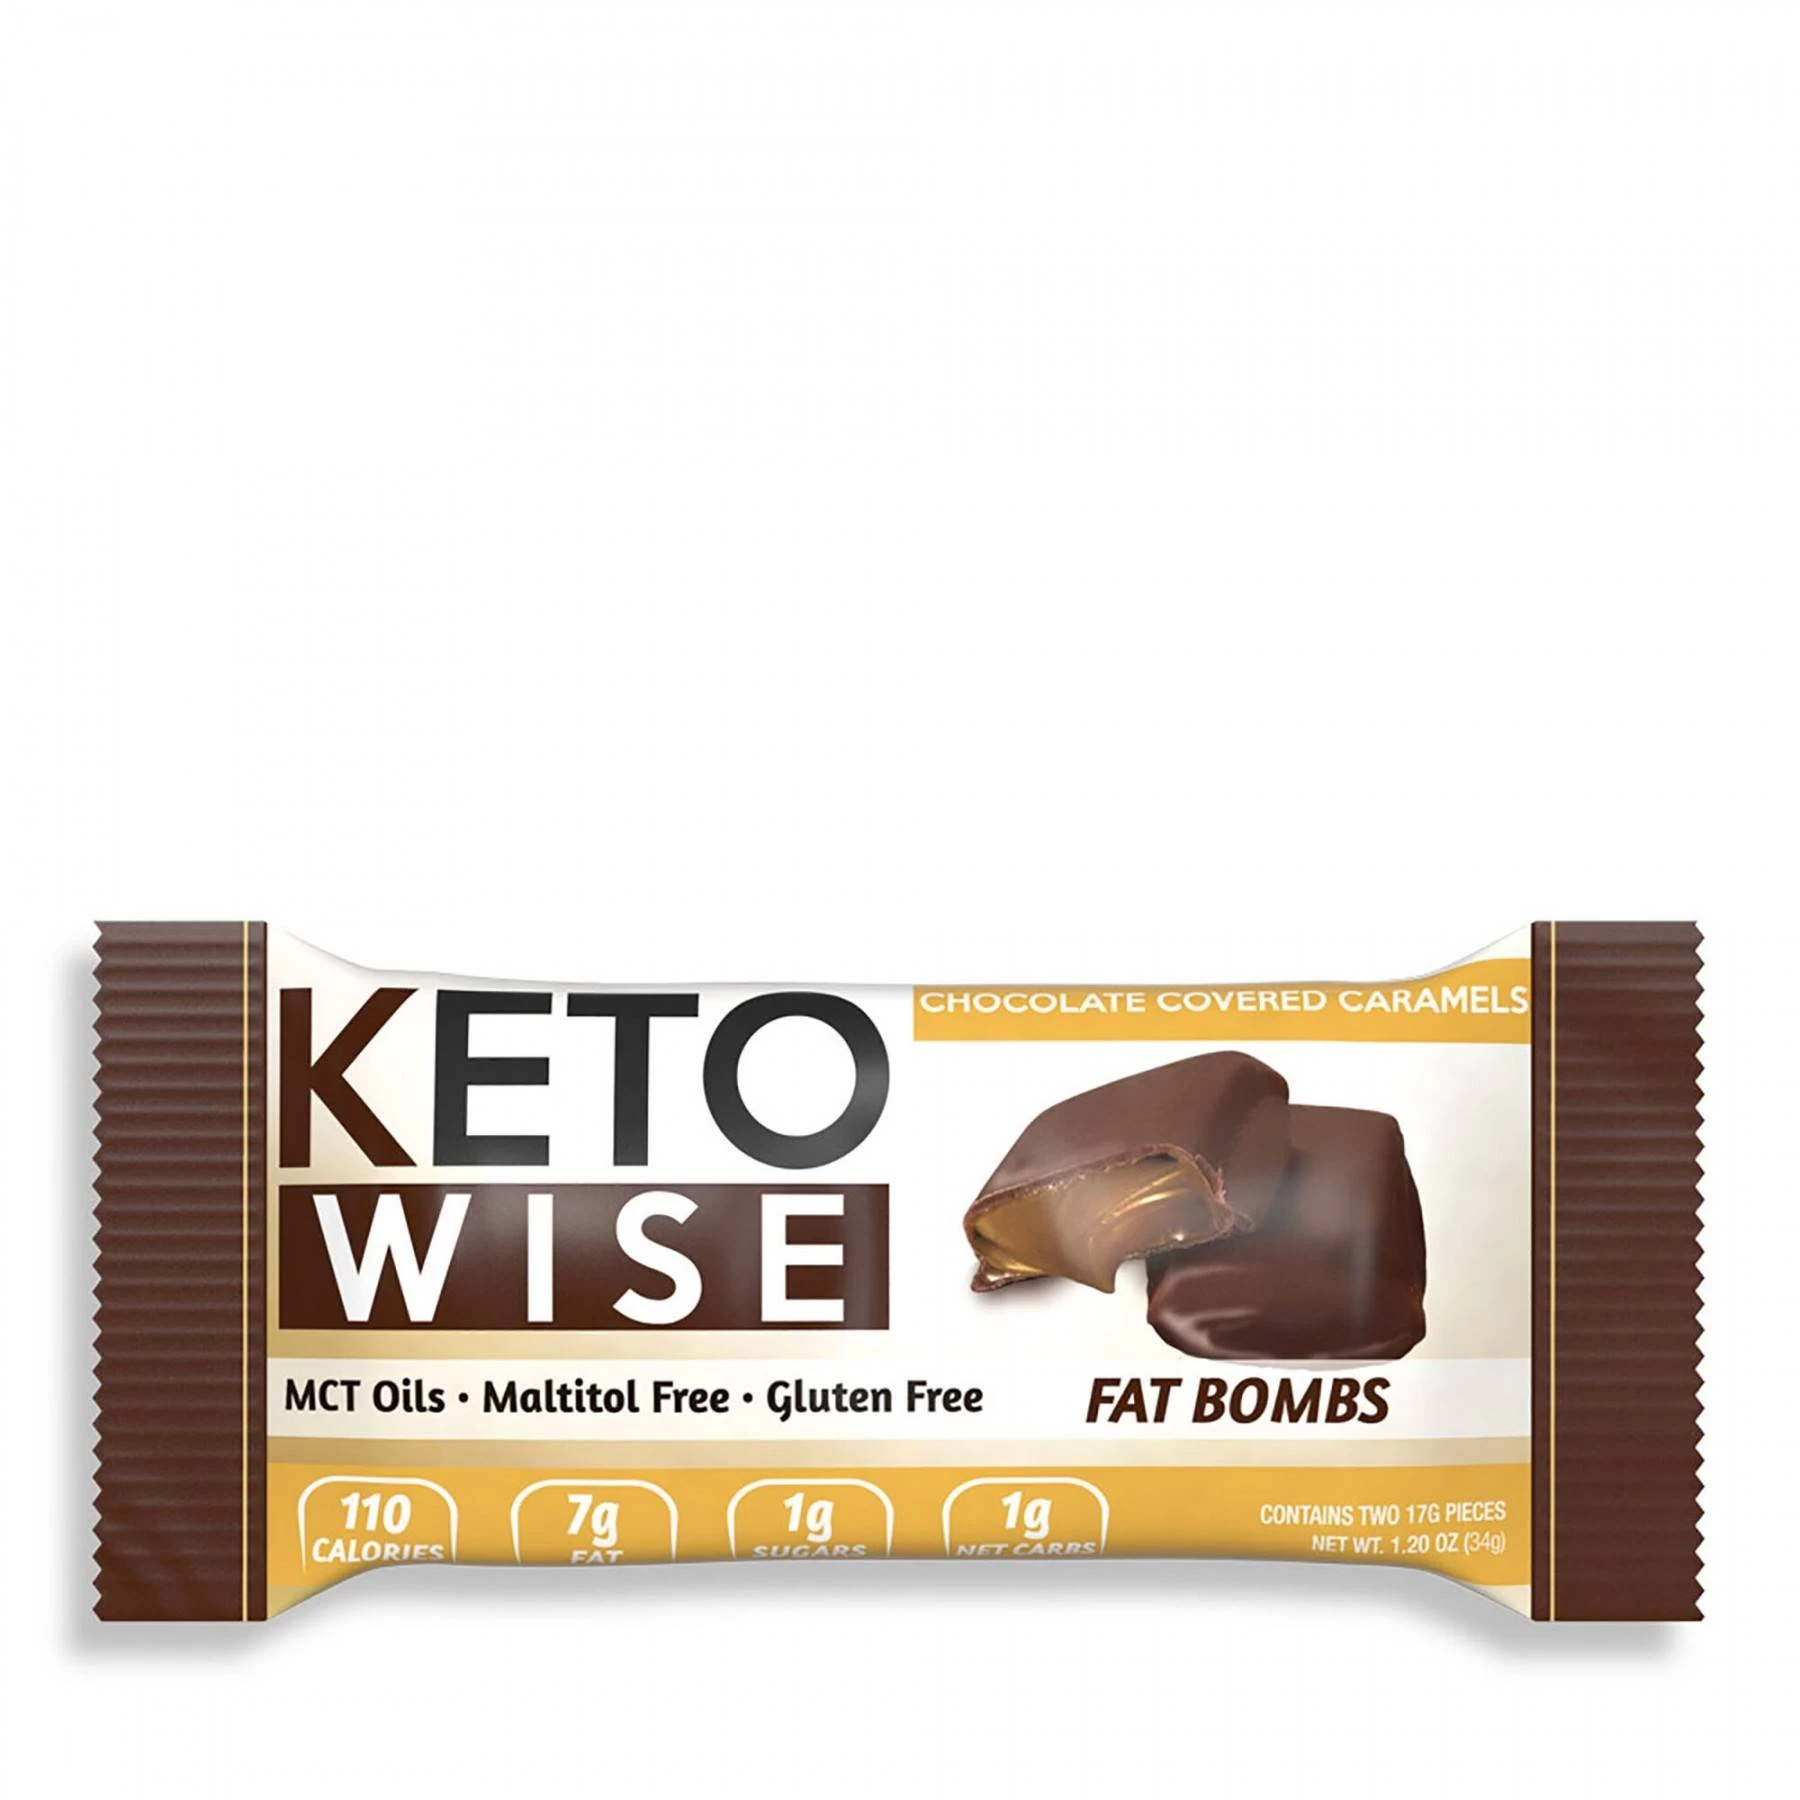 Keto wise fat bombs, bomboane invelite in ciocolata cu aroma de caramel, 32g - gnc